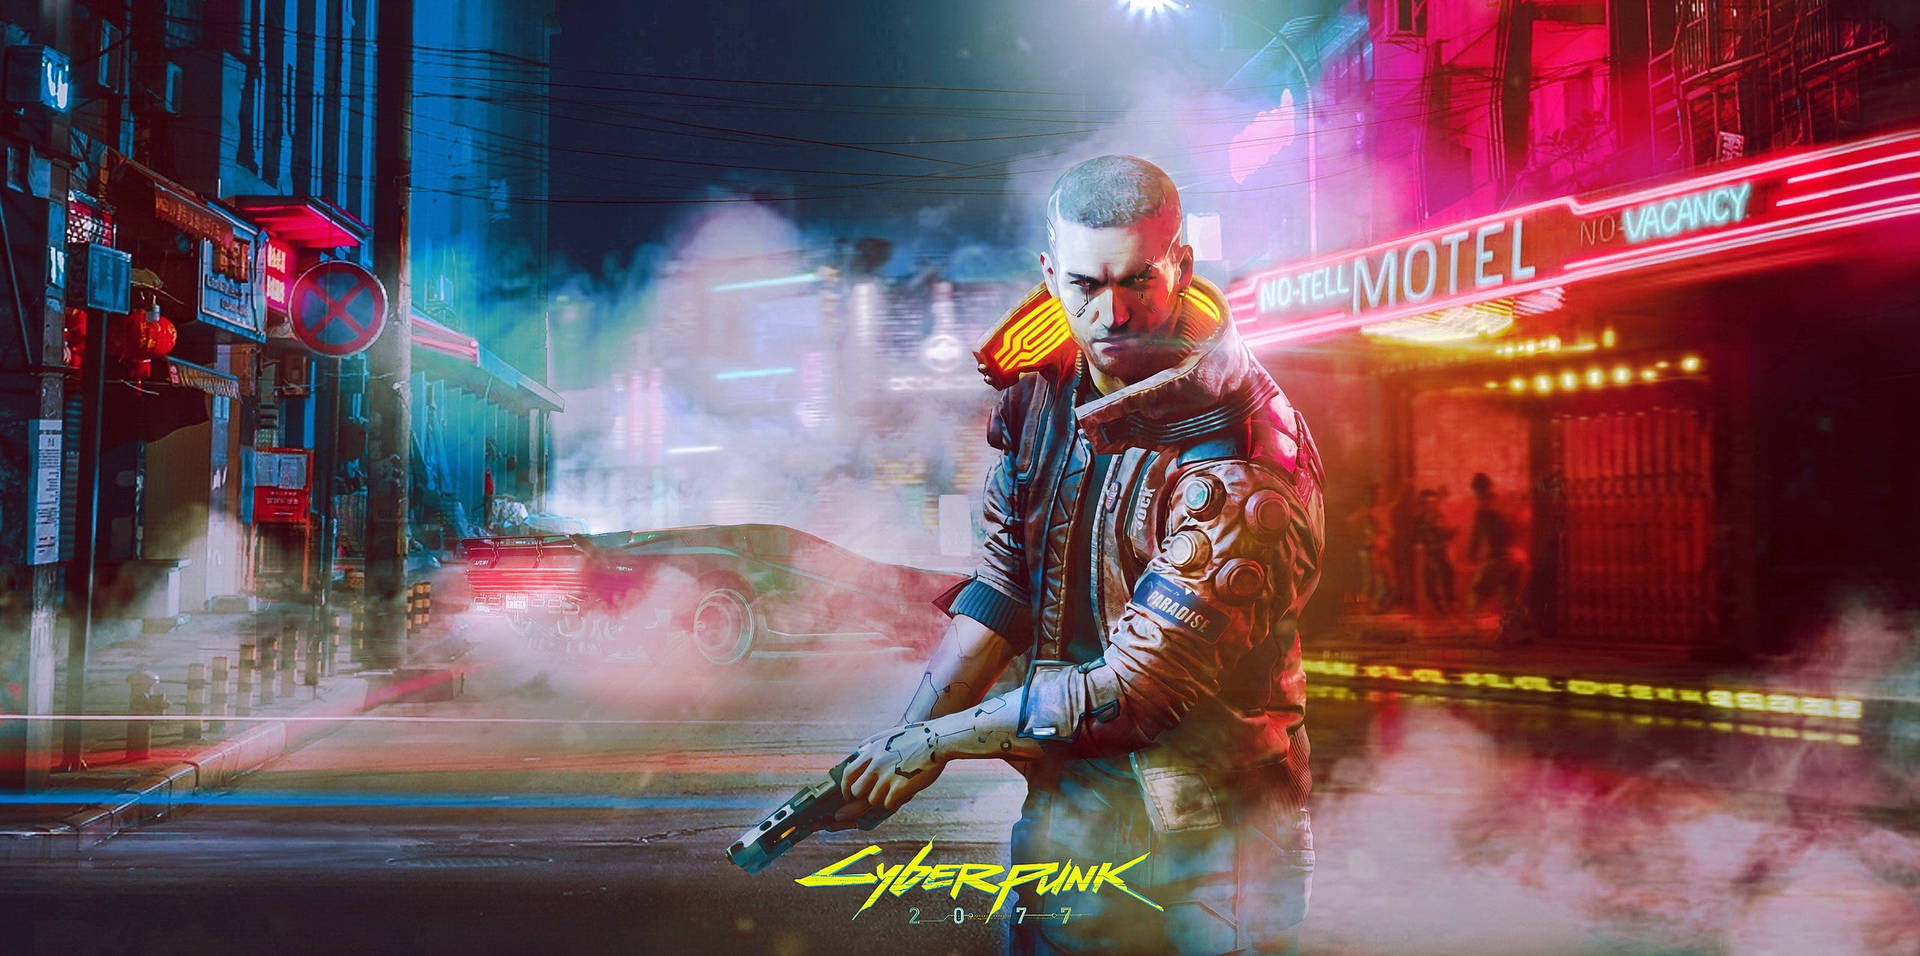 Ultrawide Cyberpunk Bald Man With Gun